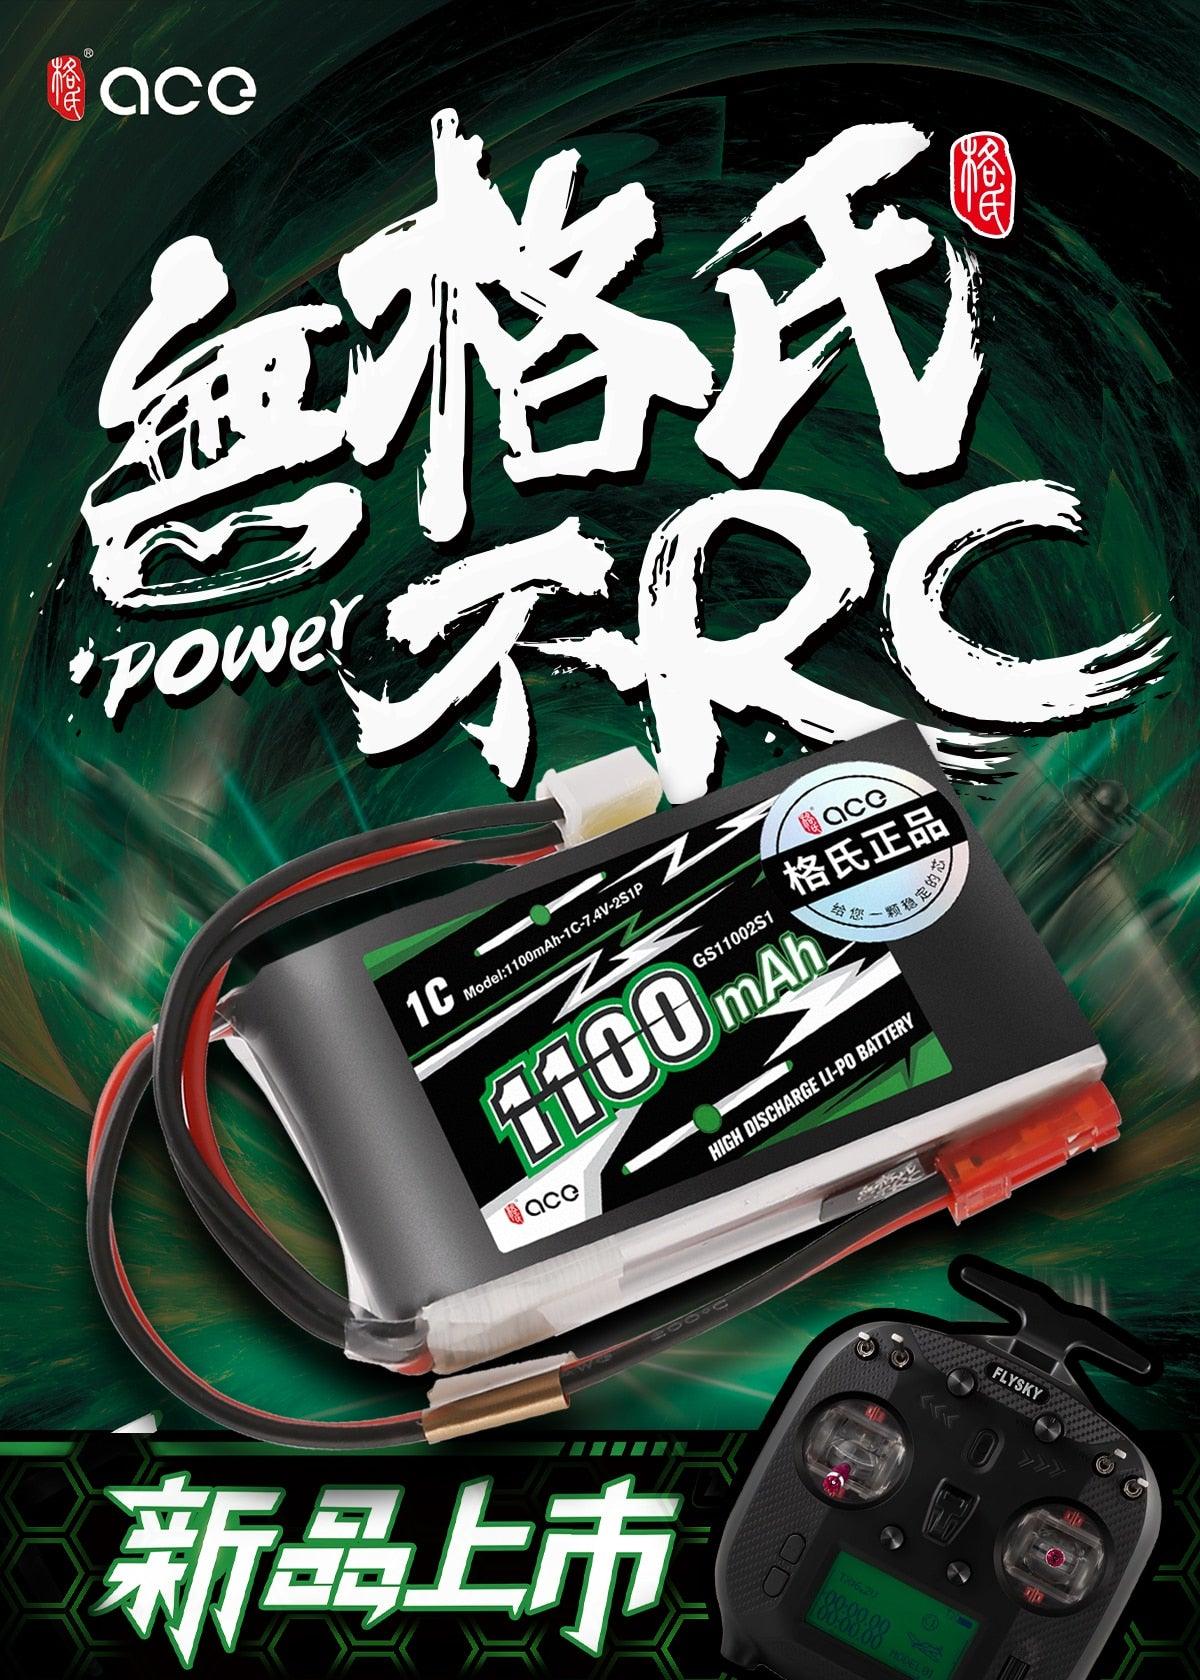 ACE 2S 7.4V 1100mAh 1C lithium battery for FLYSKY transmitter FS-ST8/G7P/GT5 gun control lithium battery - RCDrone